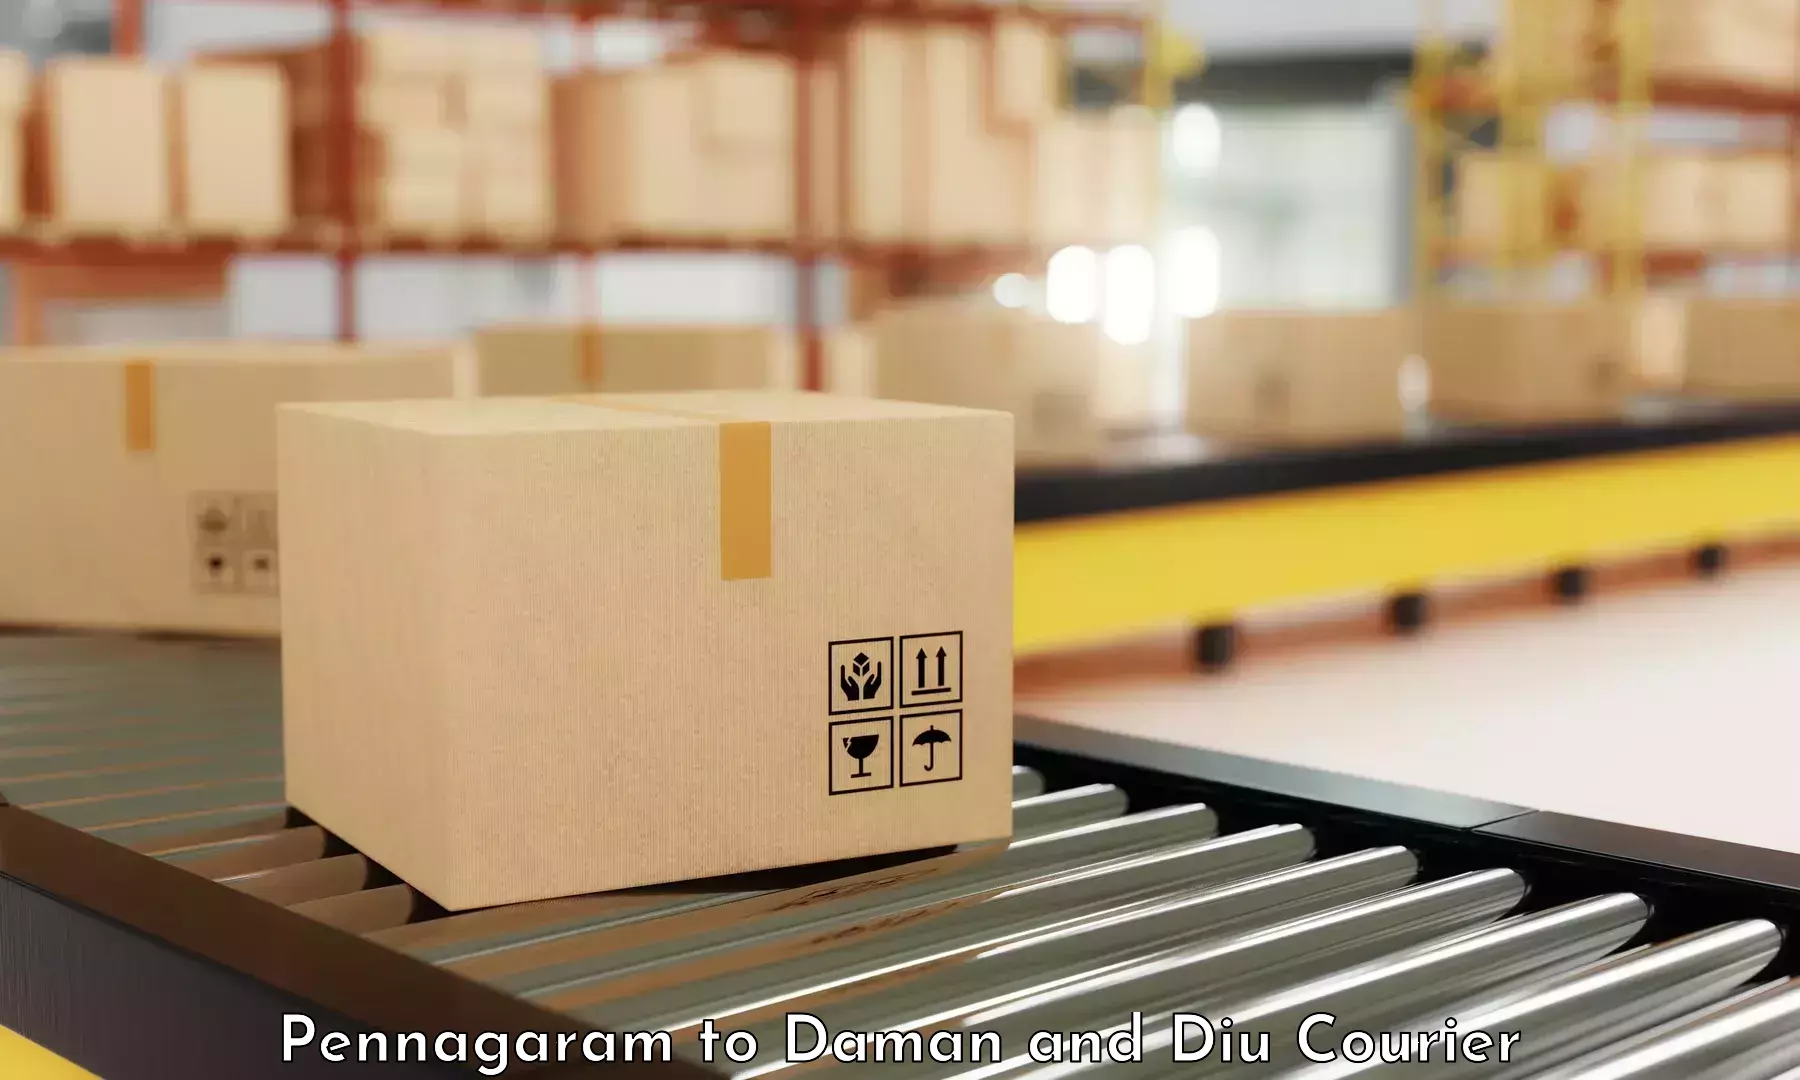 Automated shipping processes Pennagaram to Daman and Diu